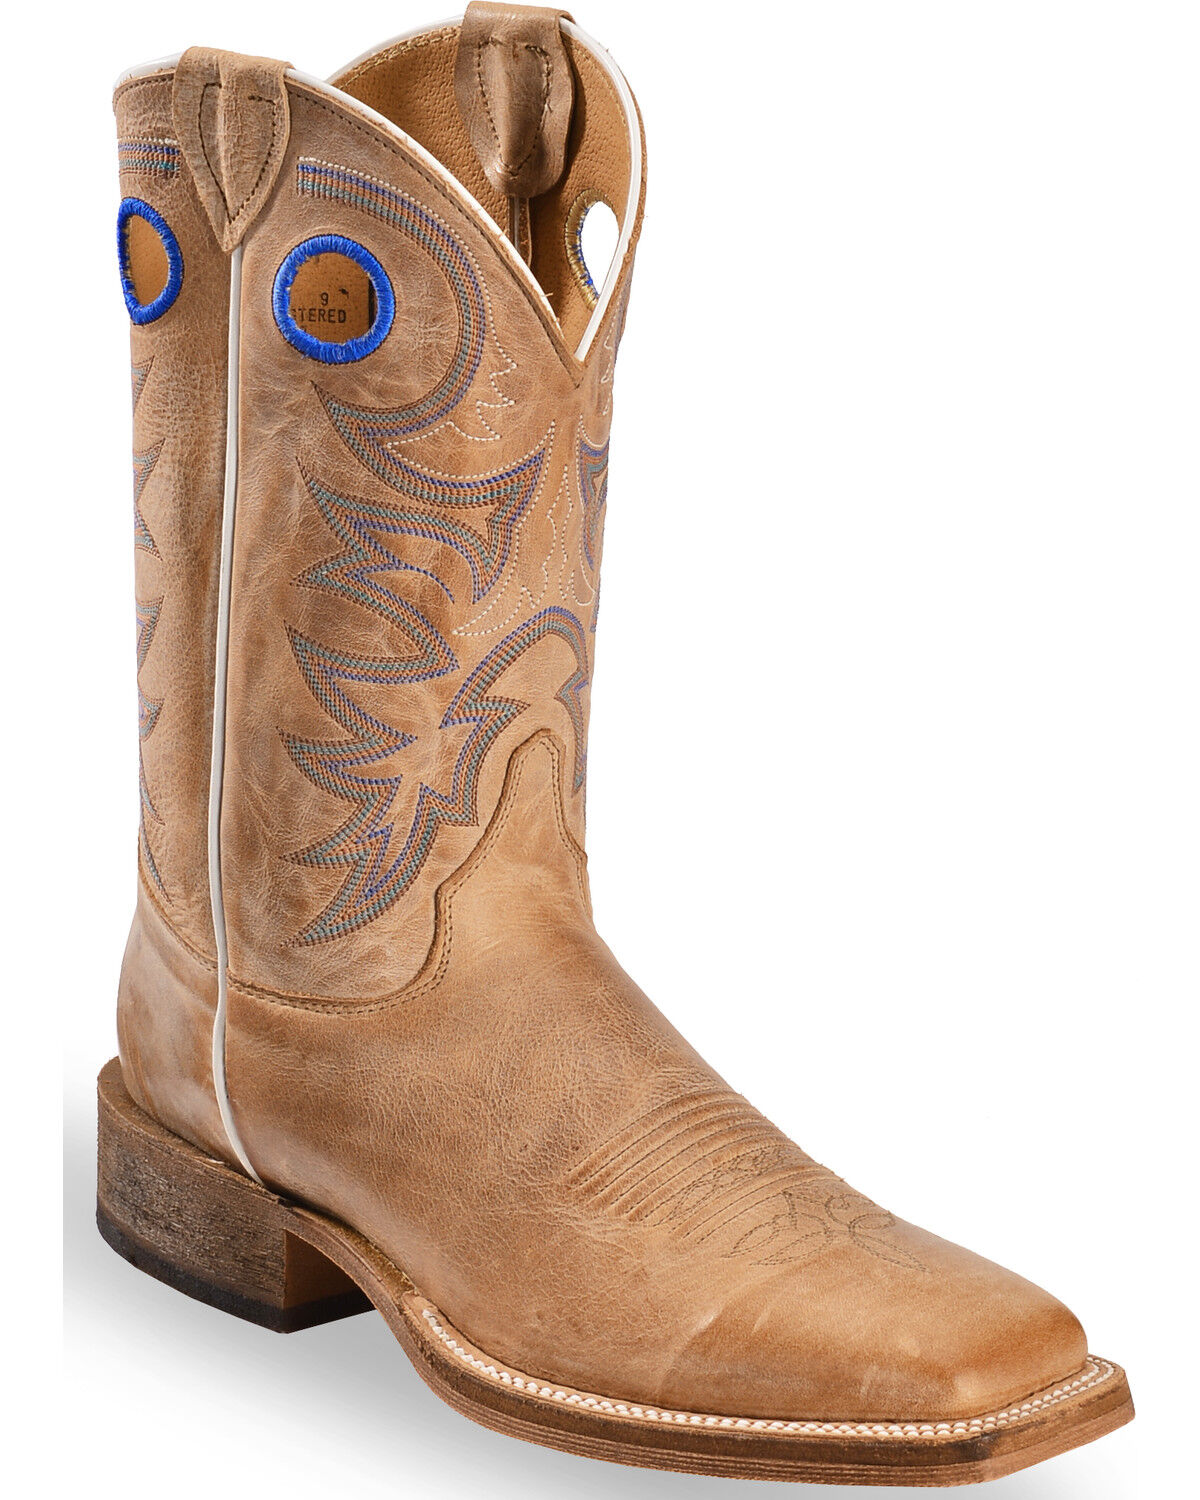 size 15 eee mens cowboy boots